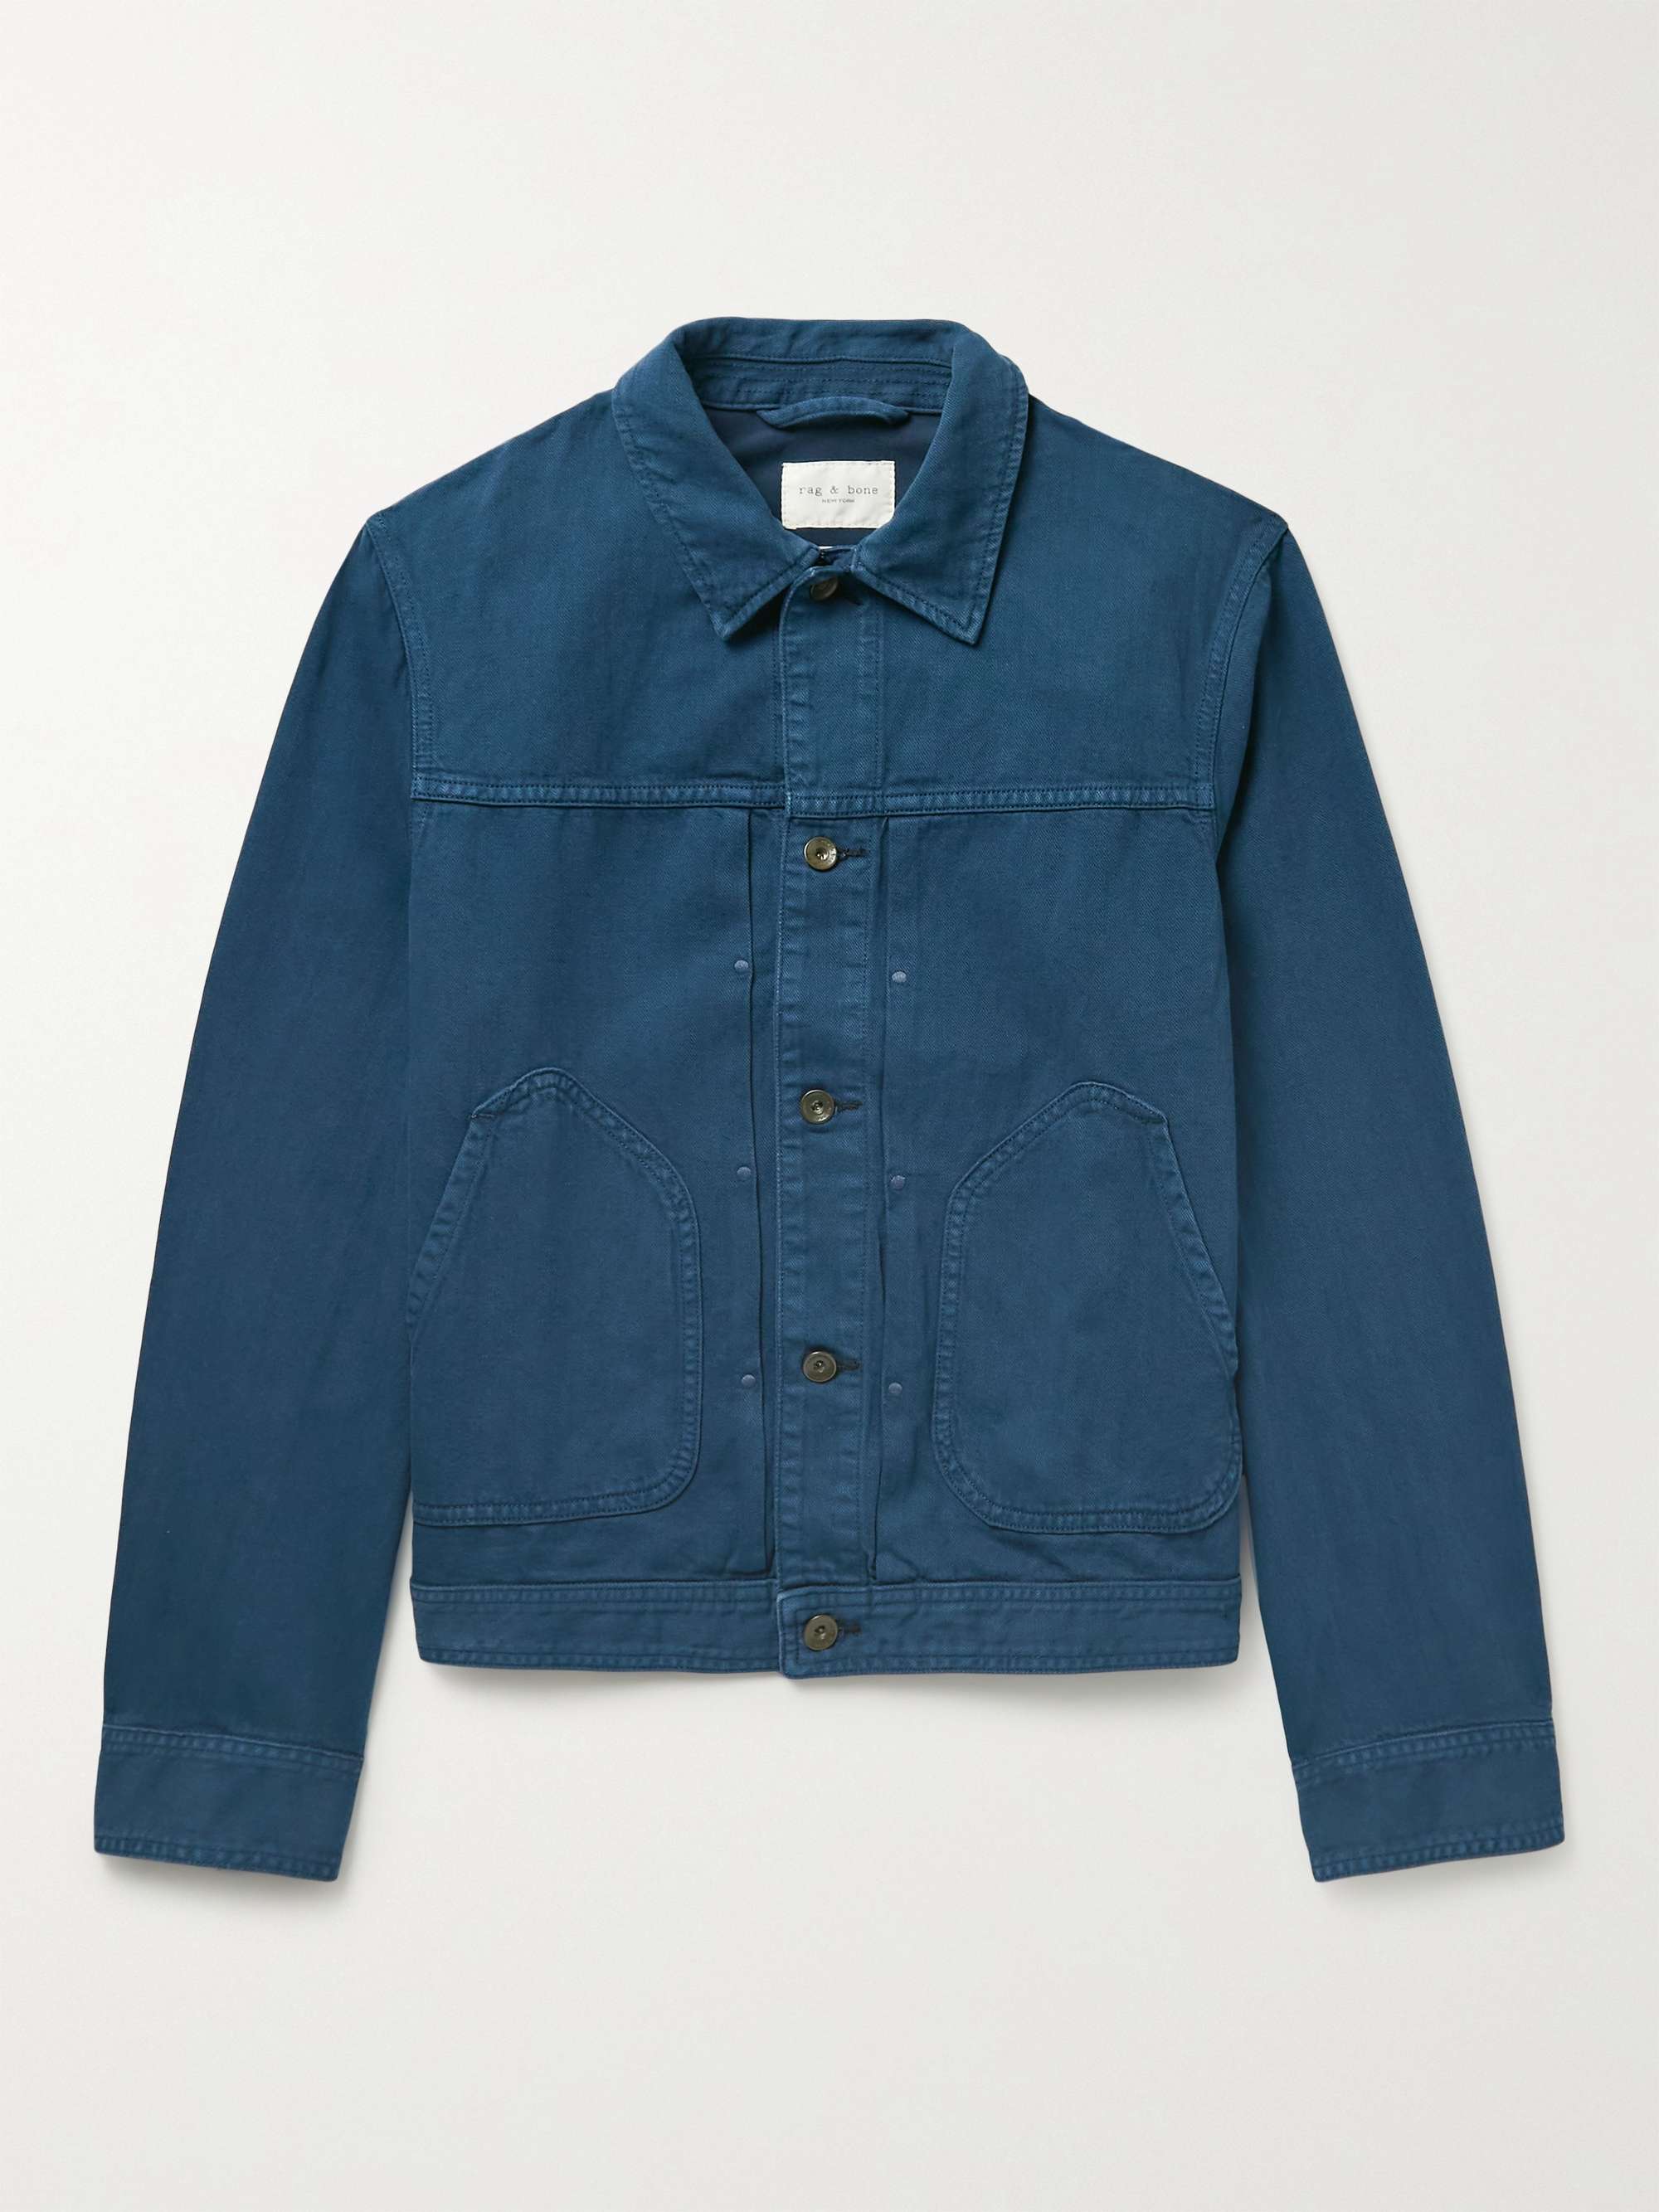 RAG & BONE Indigo-Dyed Cotton and Hemp-Blend Denim Jacket